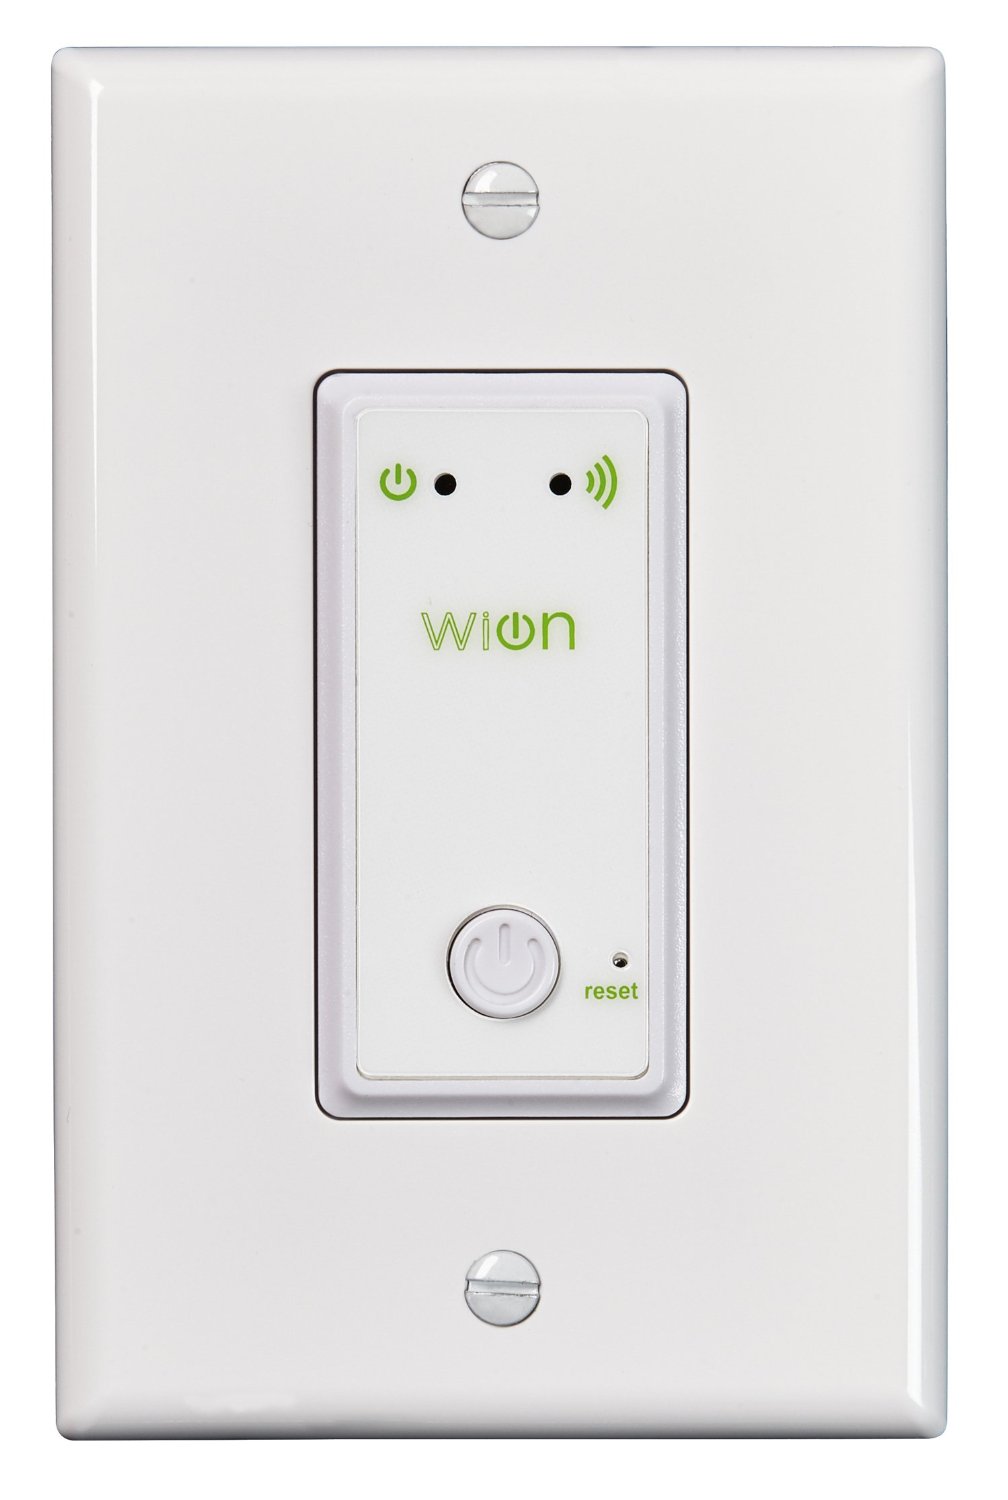 wifi smart wall switch